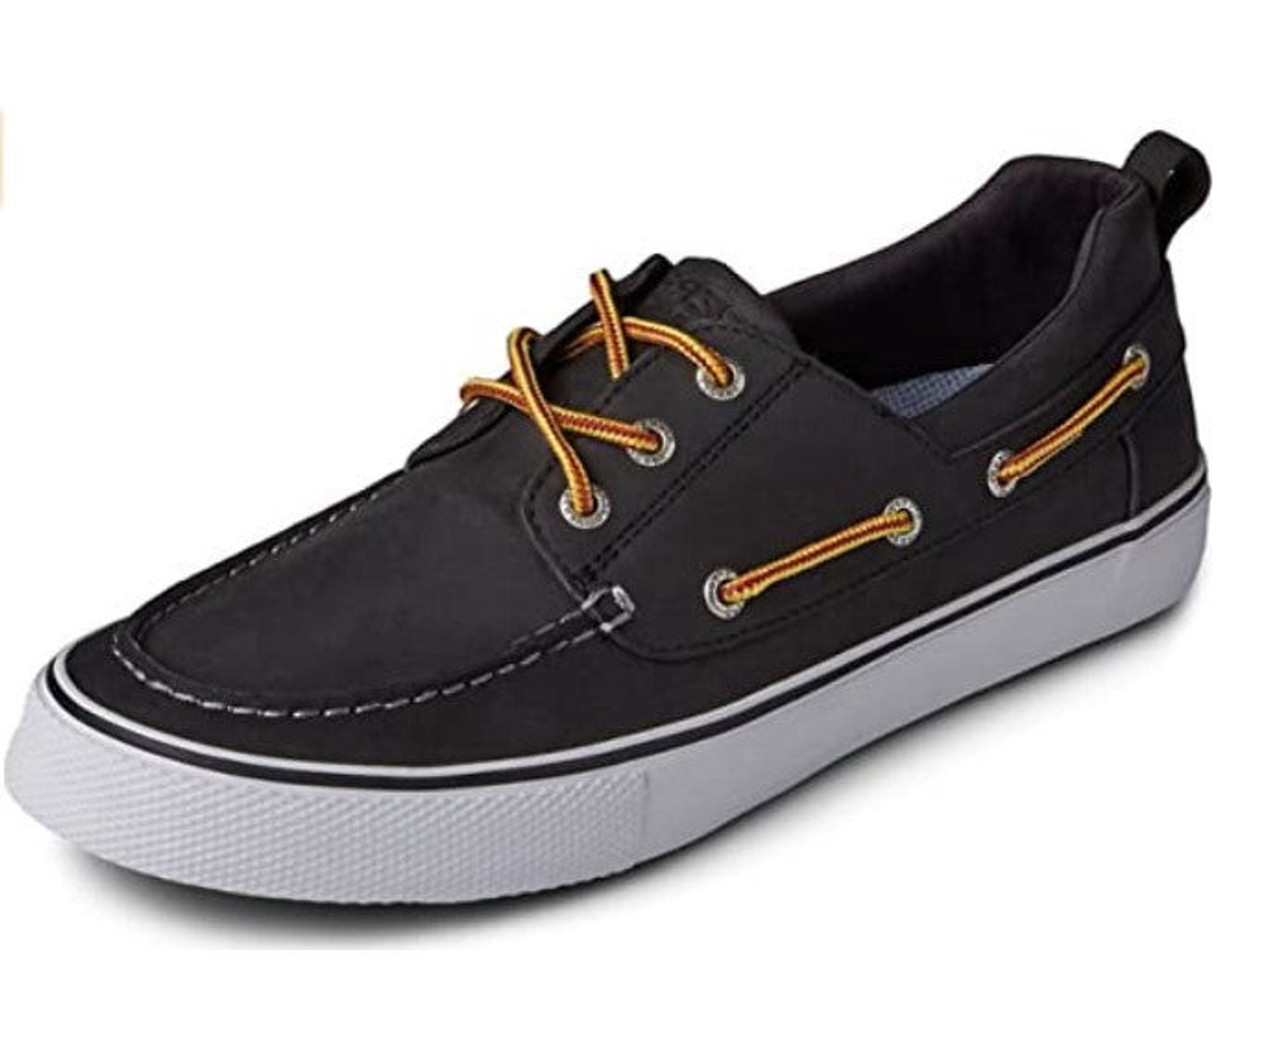 Sperry® Men's Bahama 3-Eye Leather Boat Shoe - Black/White